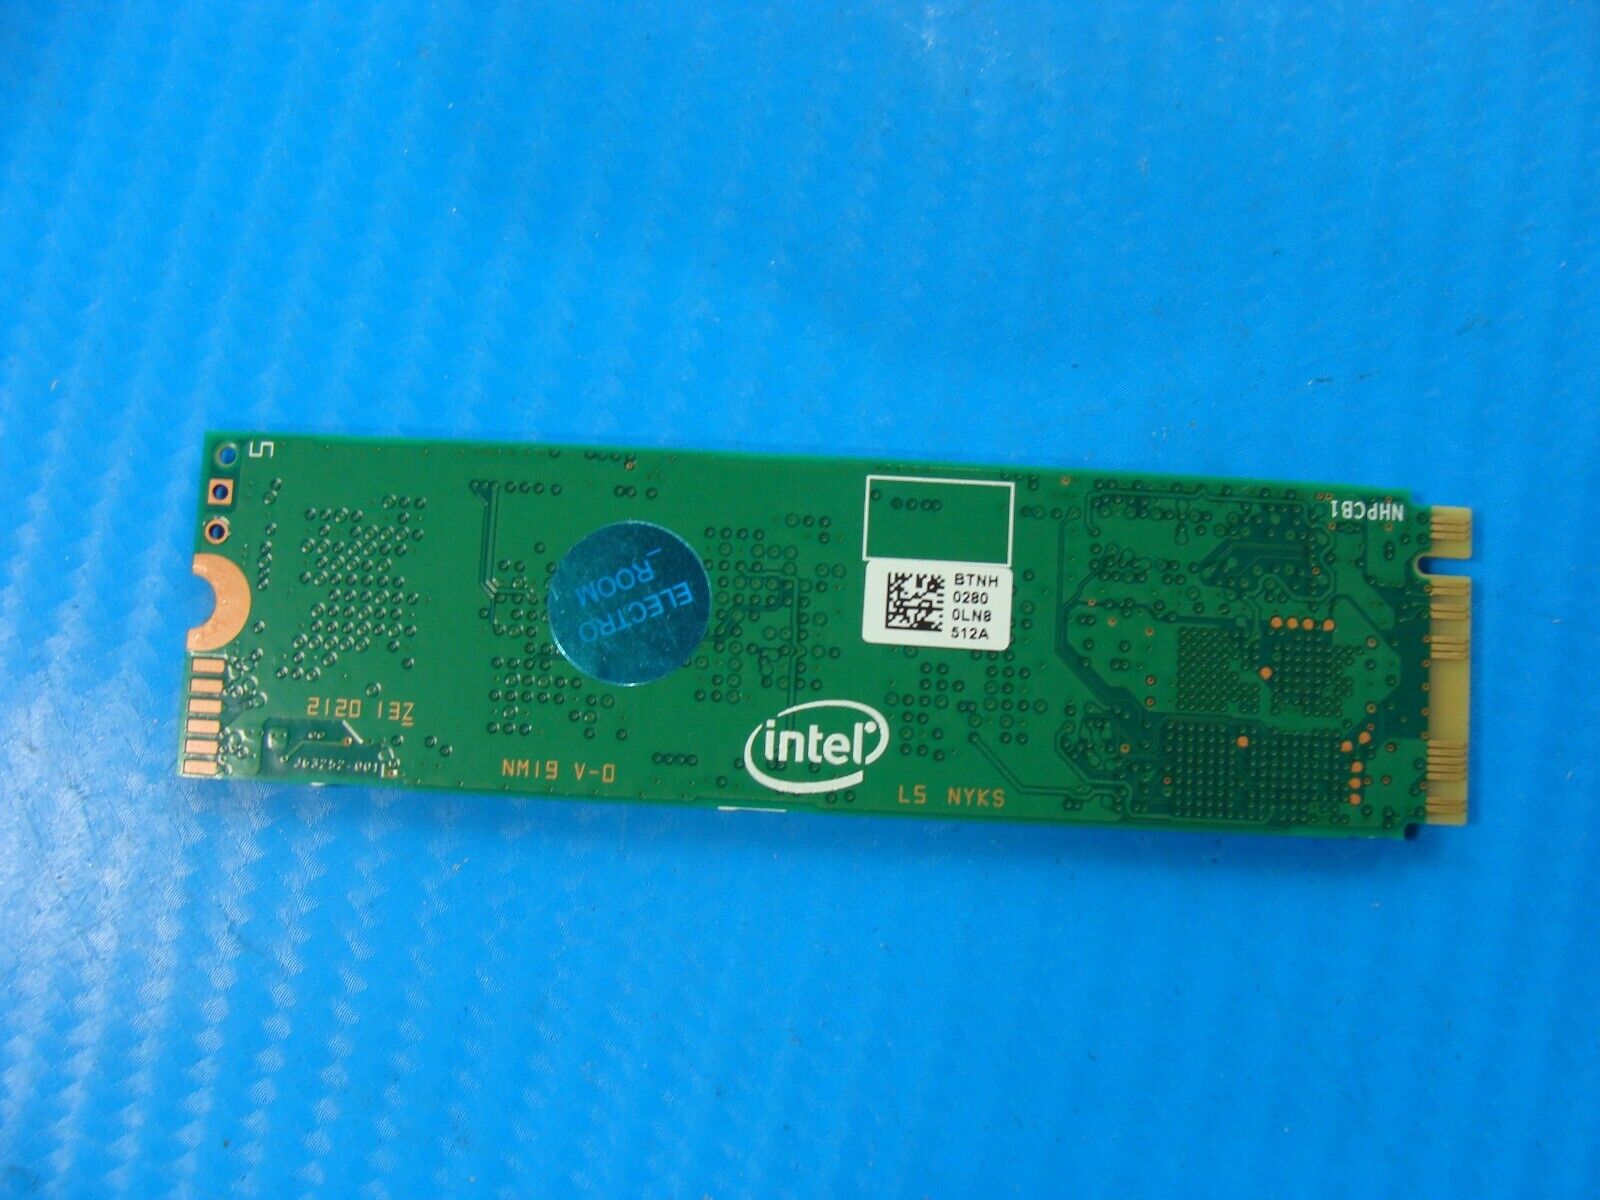 Asus F412DA Intel 512GB NVMe M.2 SSD Solid State Drive SSDPEKNW512G8